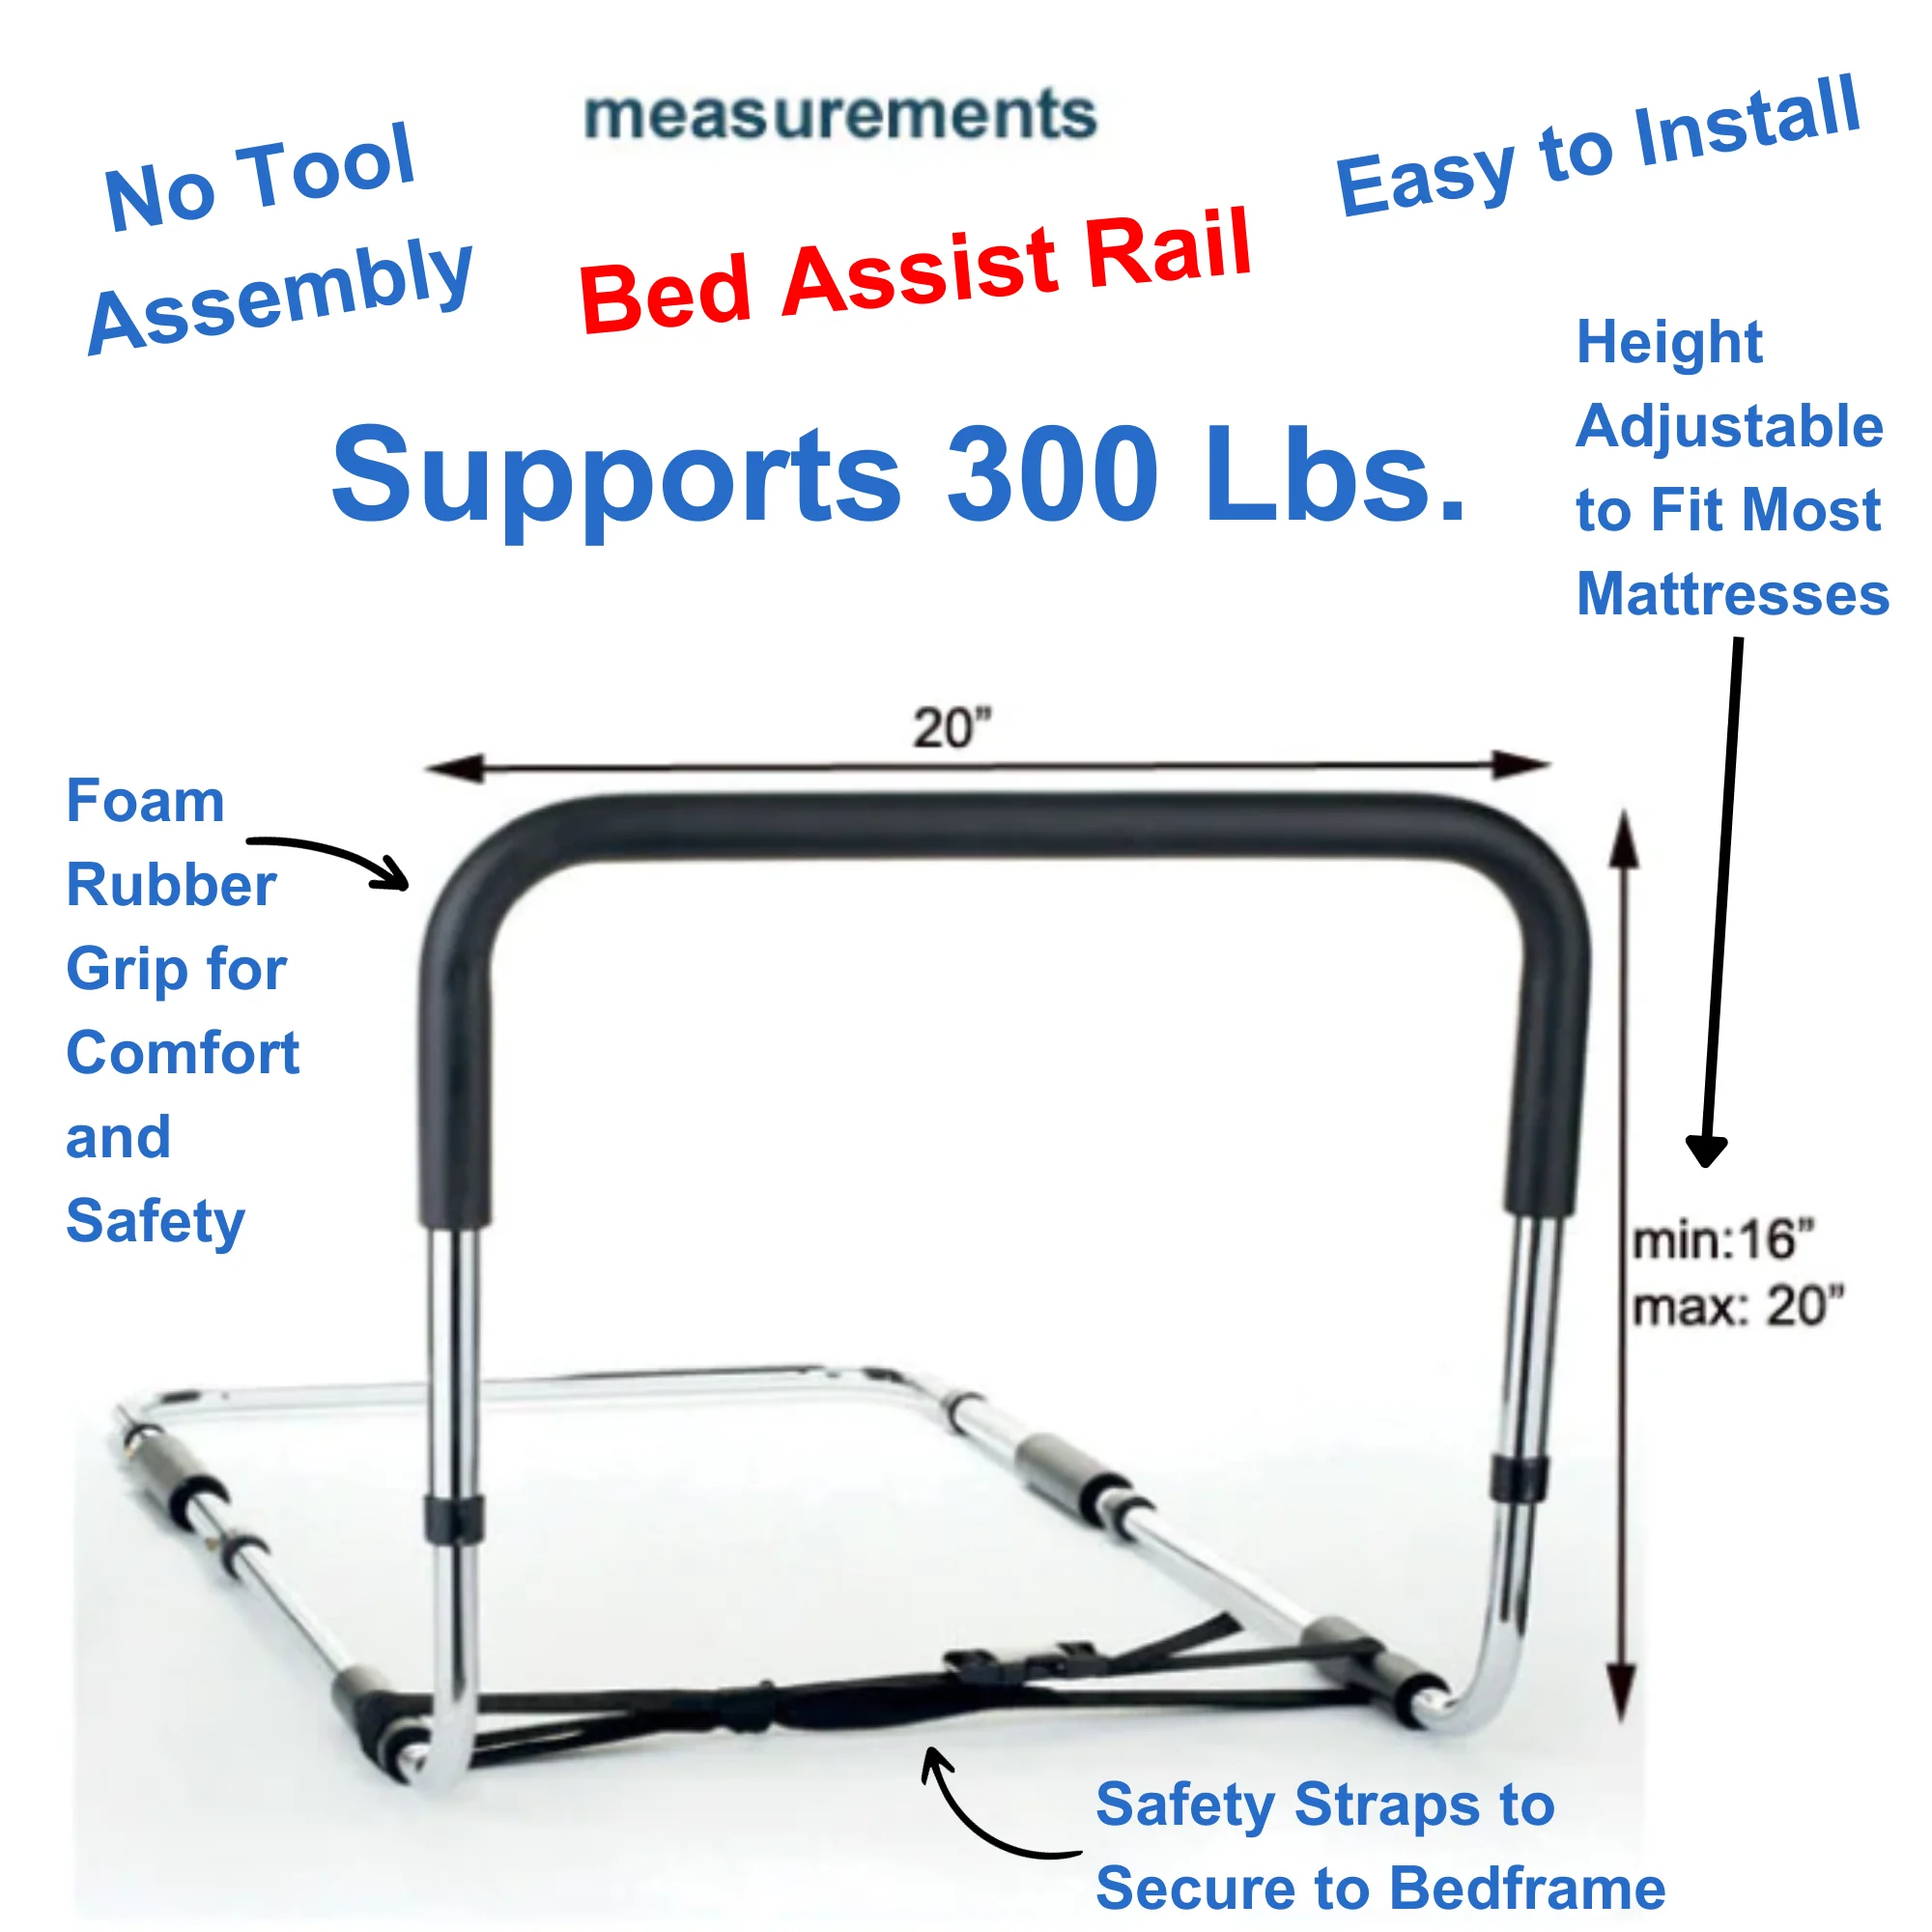 MOBB Bed Assist Rail - Foam Rubber Grip Handle, Durable, Fits 12"-16" Mattresses - Picture 2 of 12